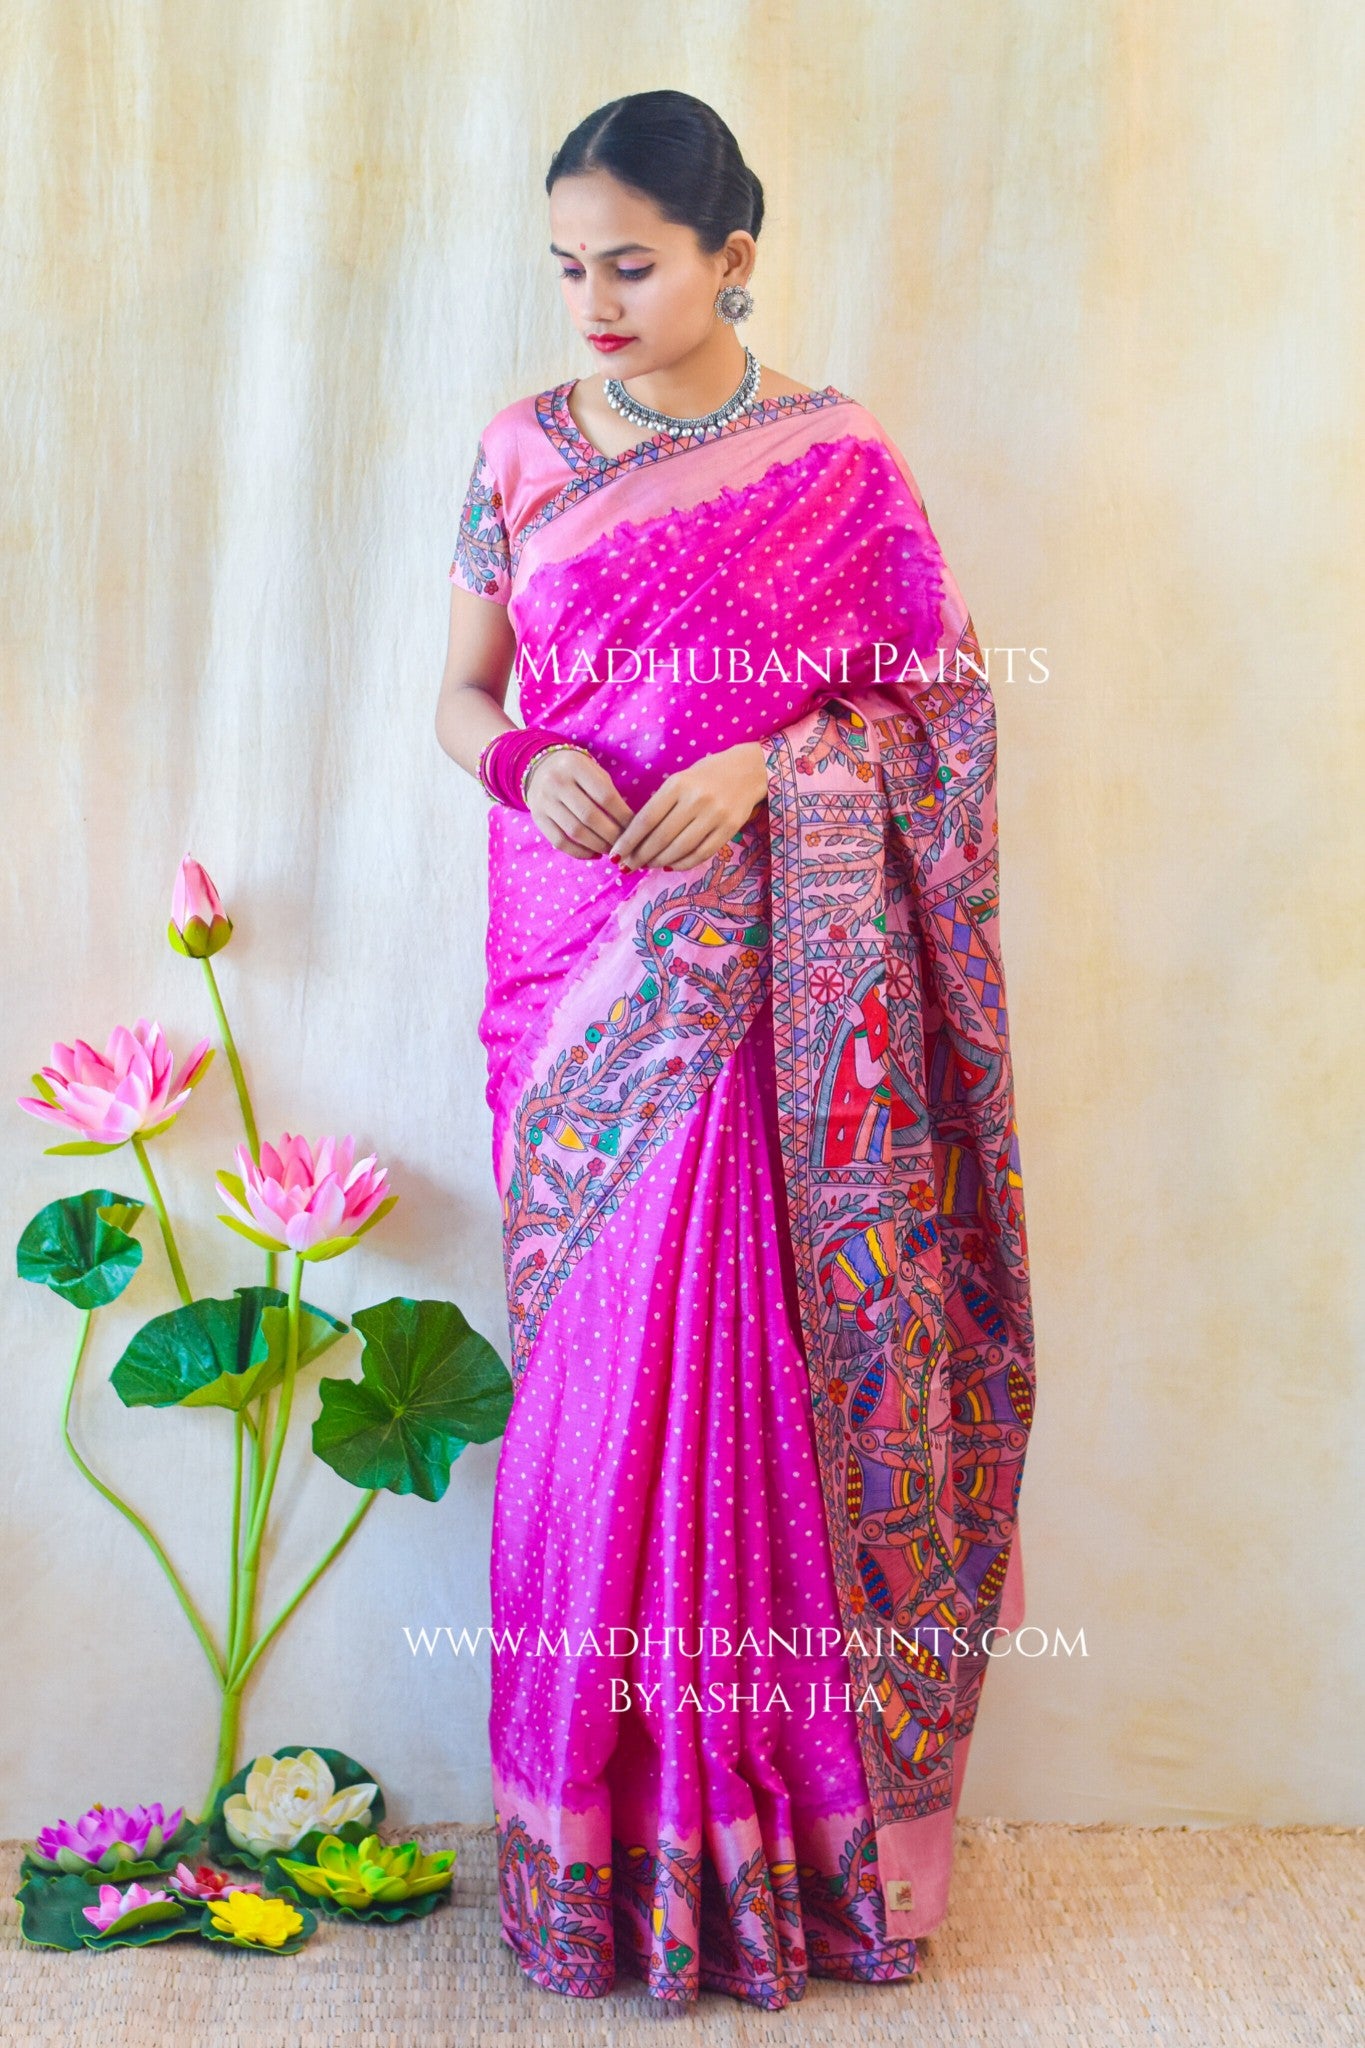 GULABI MAHFA Hand-painted Madhubani Tussar Silk Saree Blouse Set